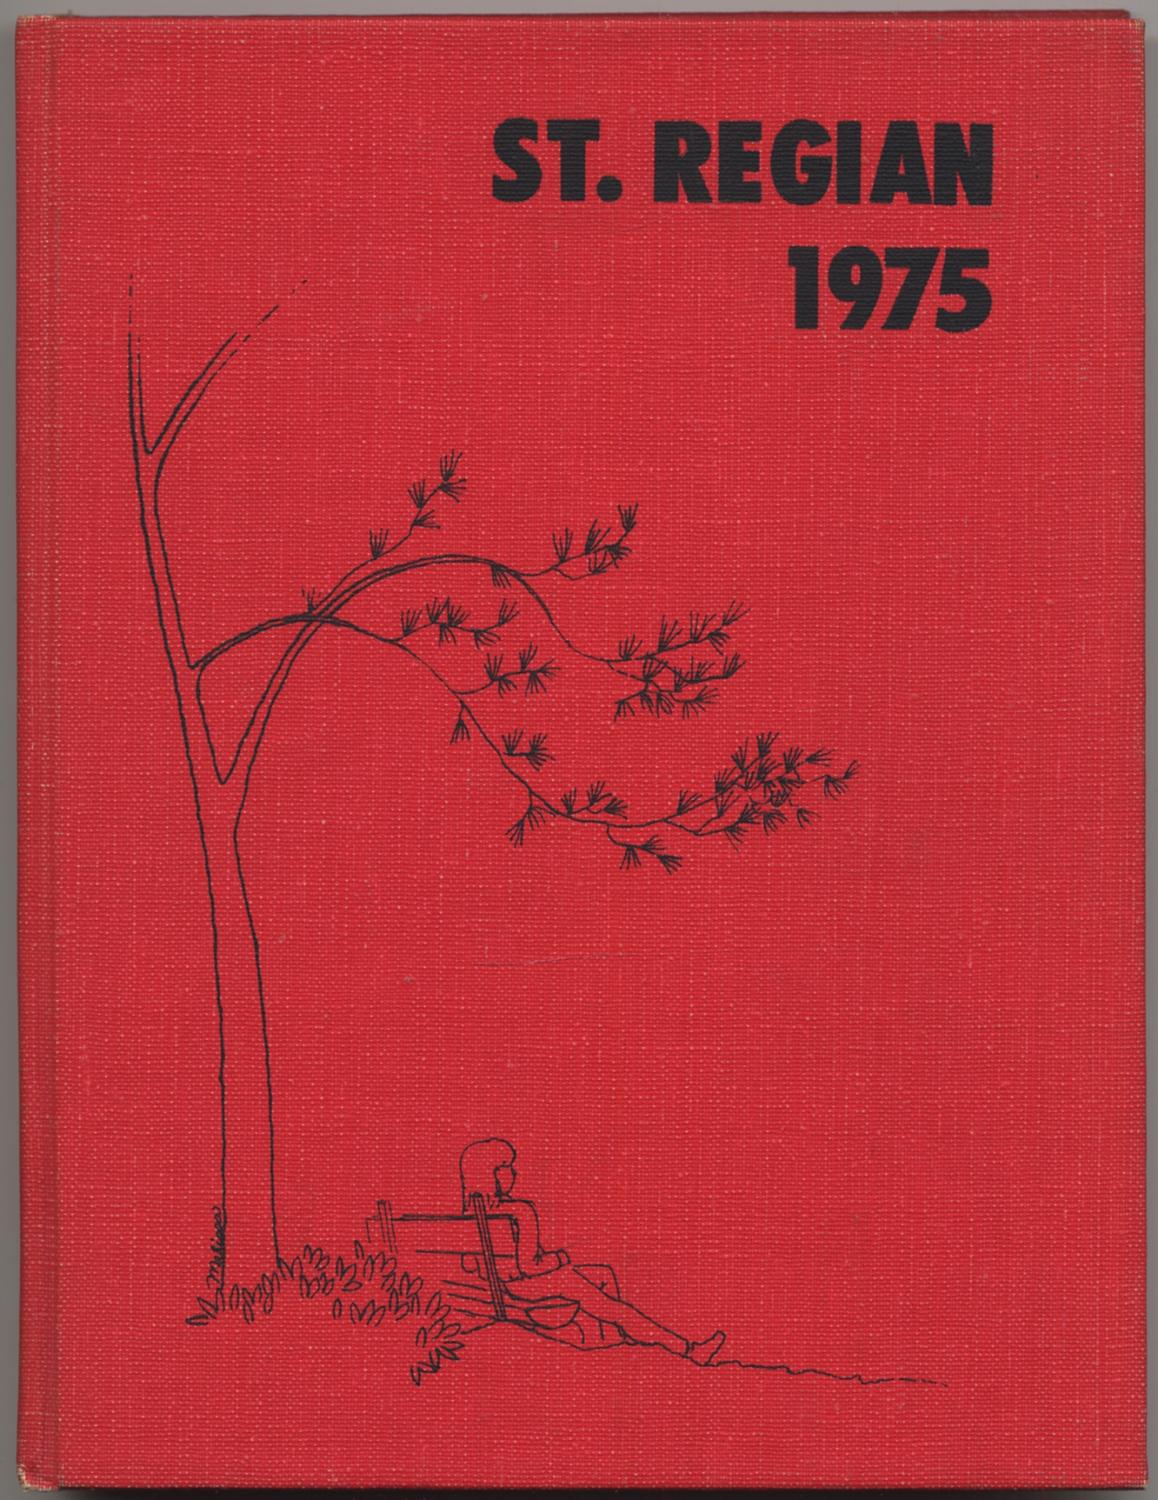 [Paul Smith's College Yearbook]: St. Regian 1975: Fine Hardcover (1975 ...